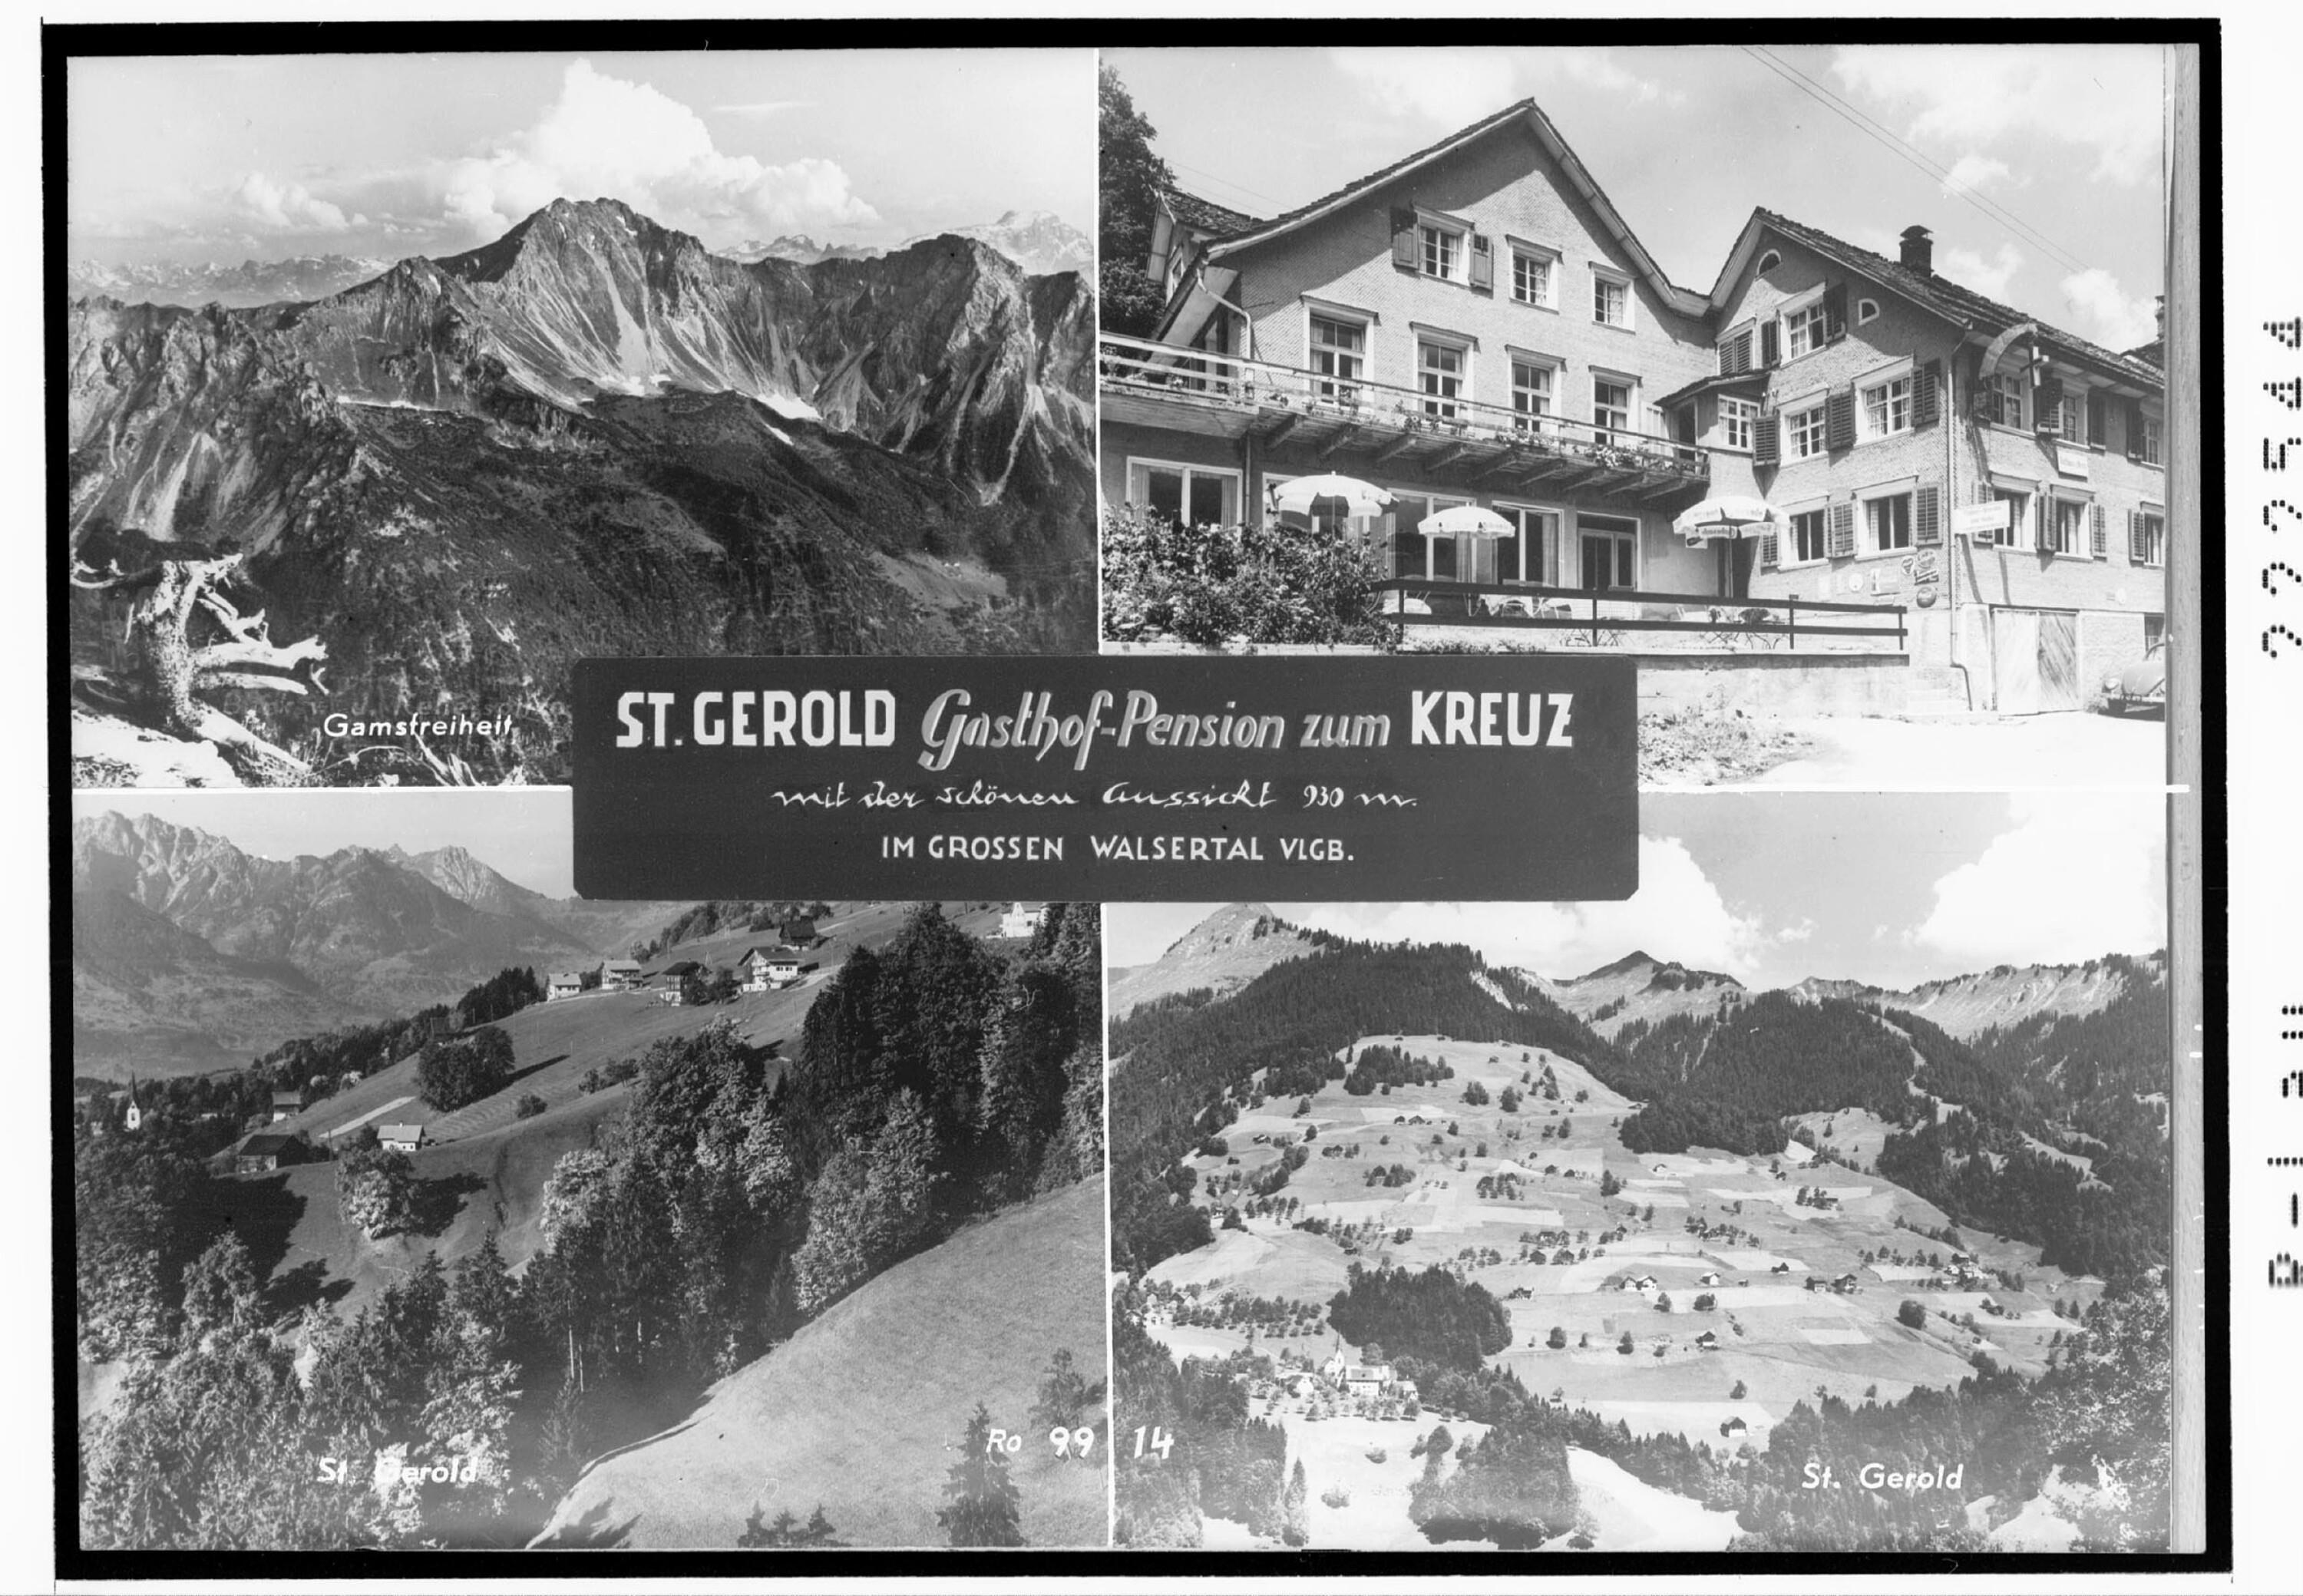 St.Gerold / Gasthof - Pension zum Kreuz></div>


    <hr>
    <div class=